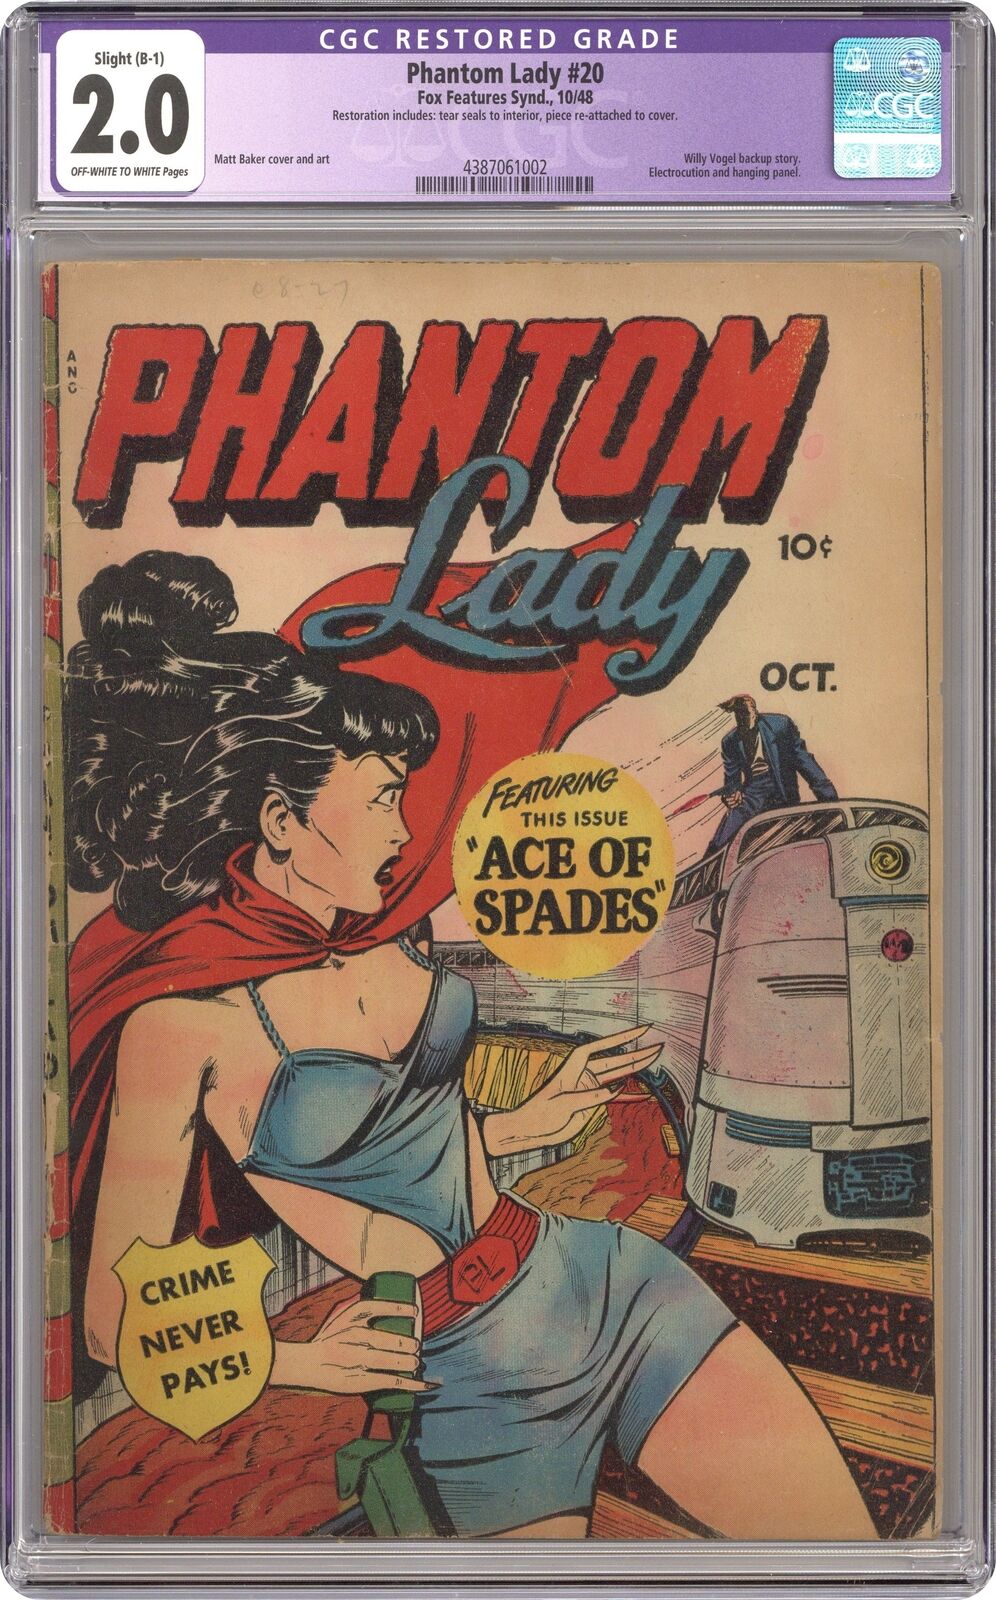 Phantom Lady #20 CGC 2.0 RESTORED 1948 4387061002